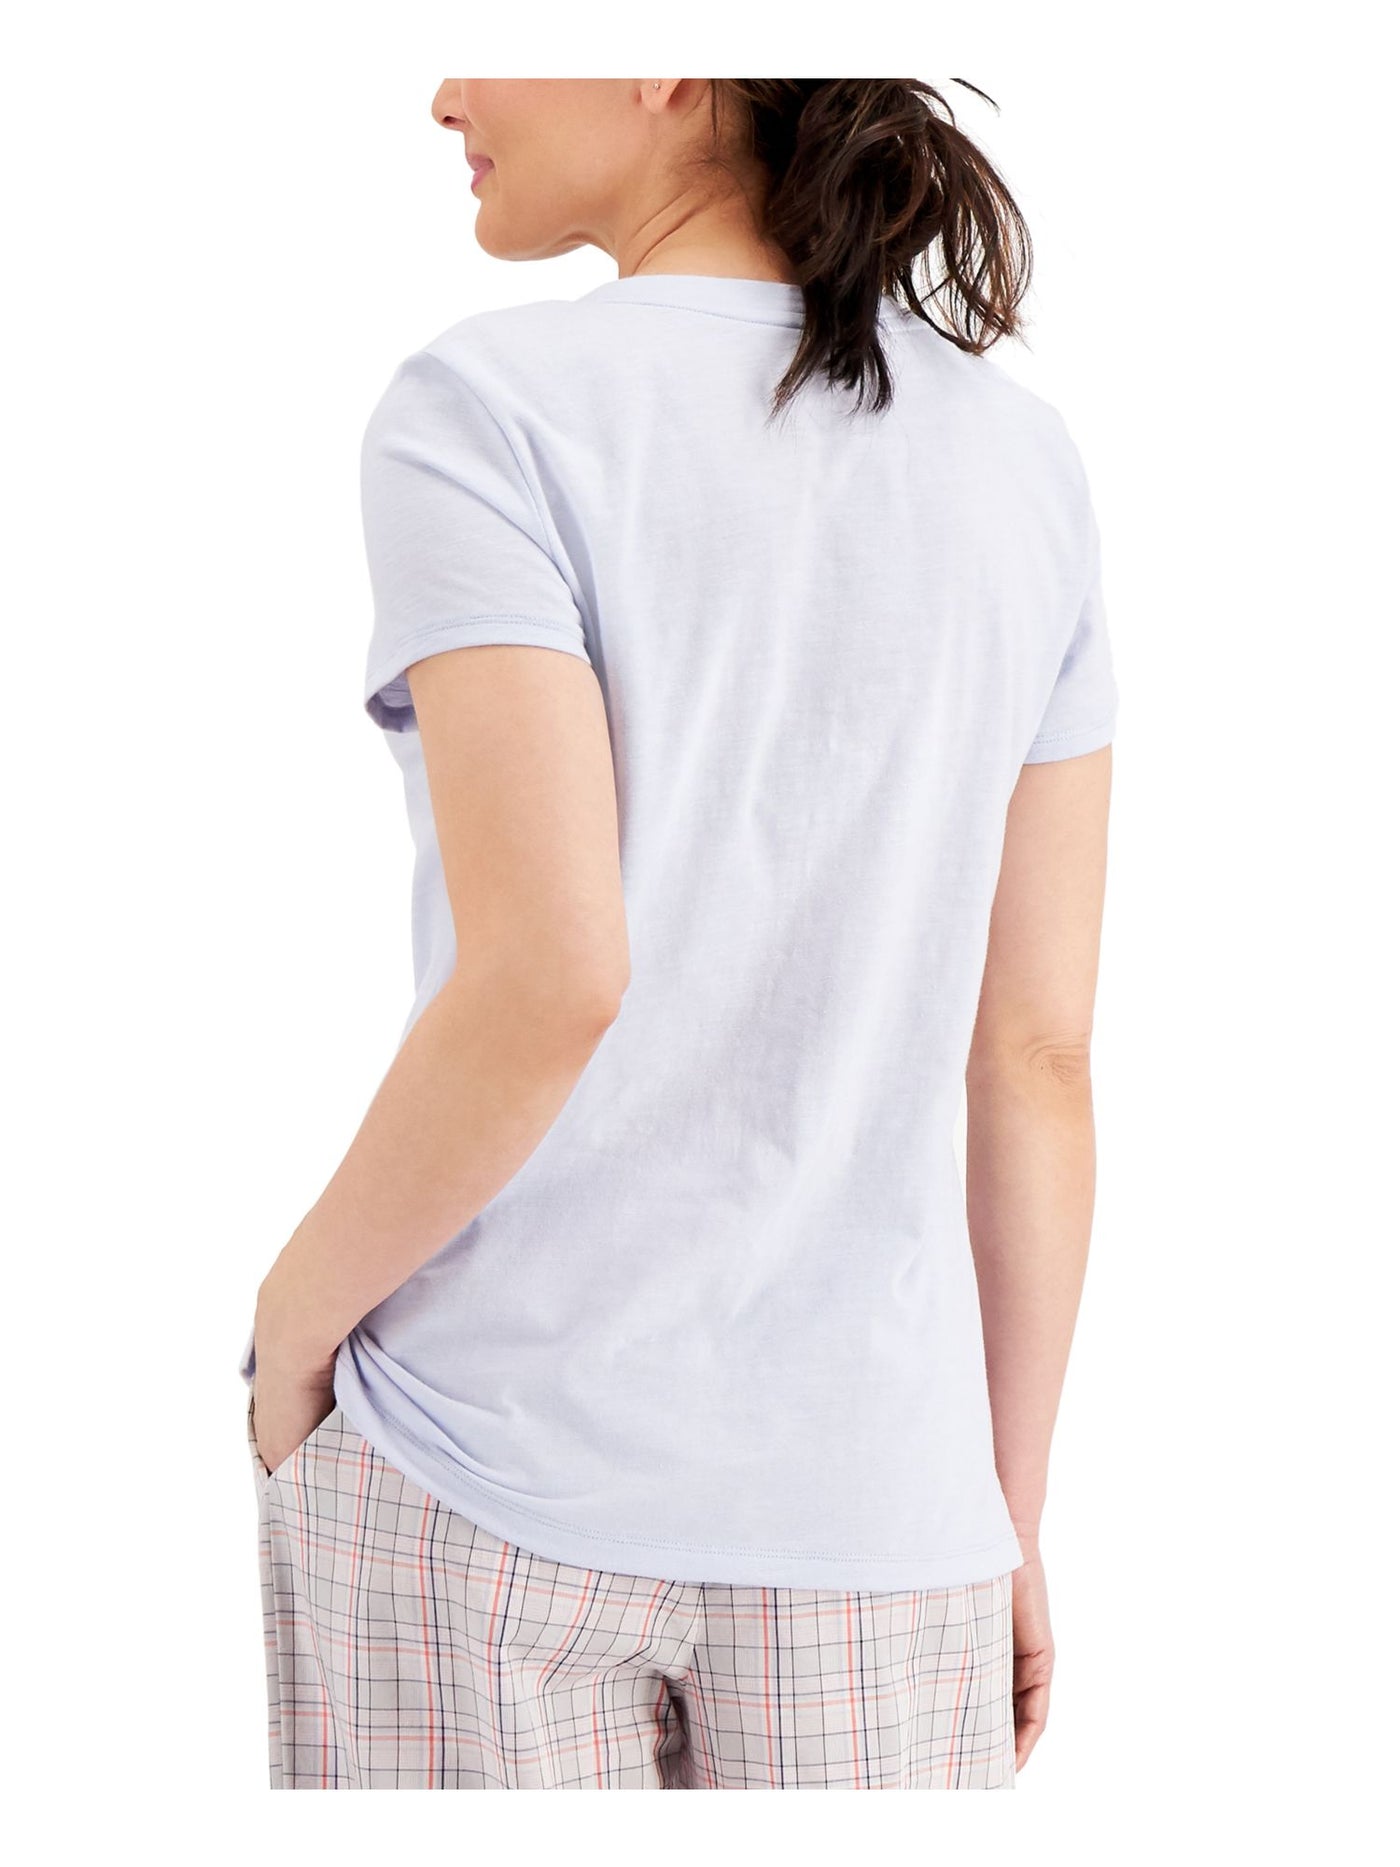 CHARTER CLUB Intimates Light Blue Cotton Blend V-Neck Sleepwear Sleep Shirt Pajama Top XL